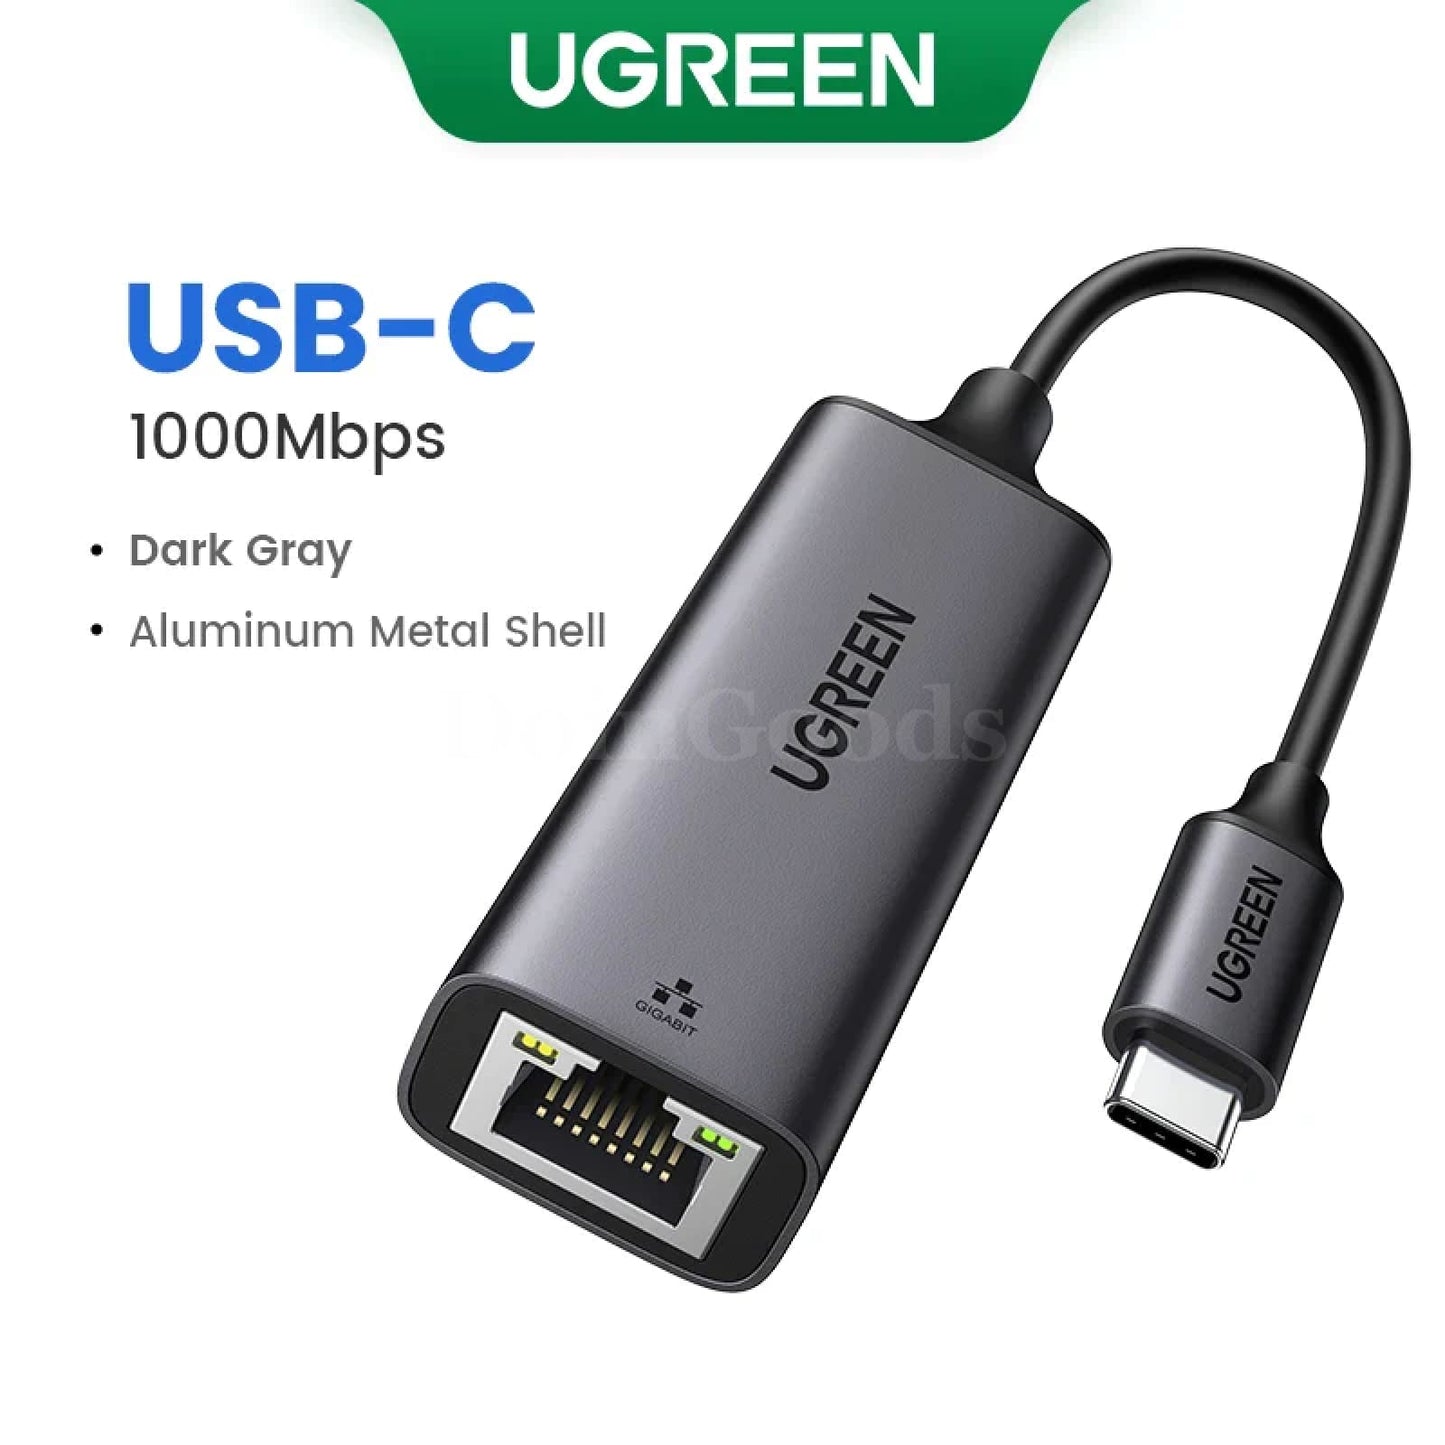 Ugreen Usb C Ethernet Adapter 1000/100Mbps Lan Rj45 For Laptop Macbook Usb-C Dark Gray 301635